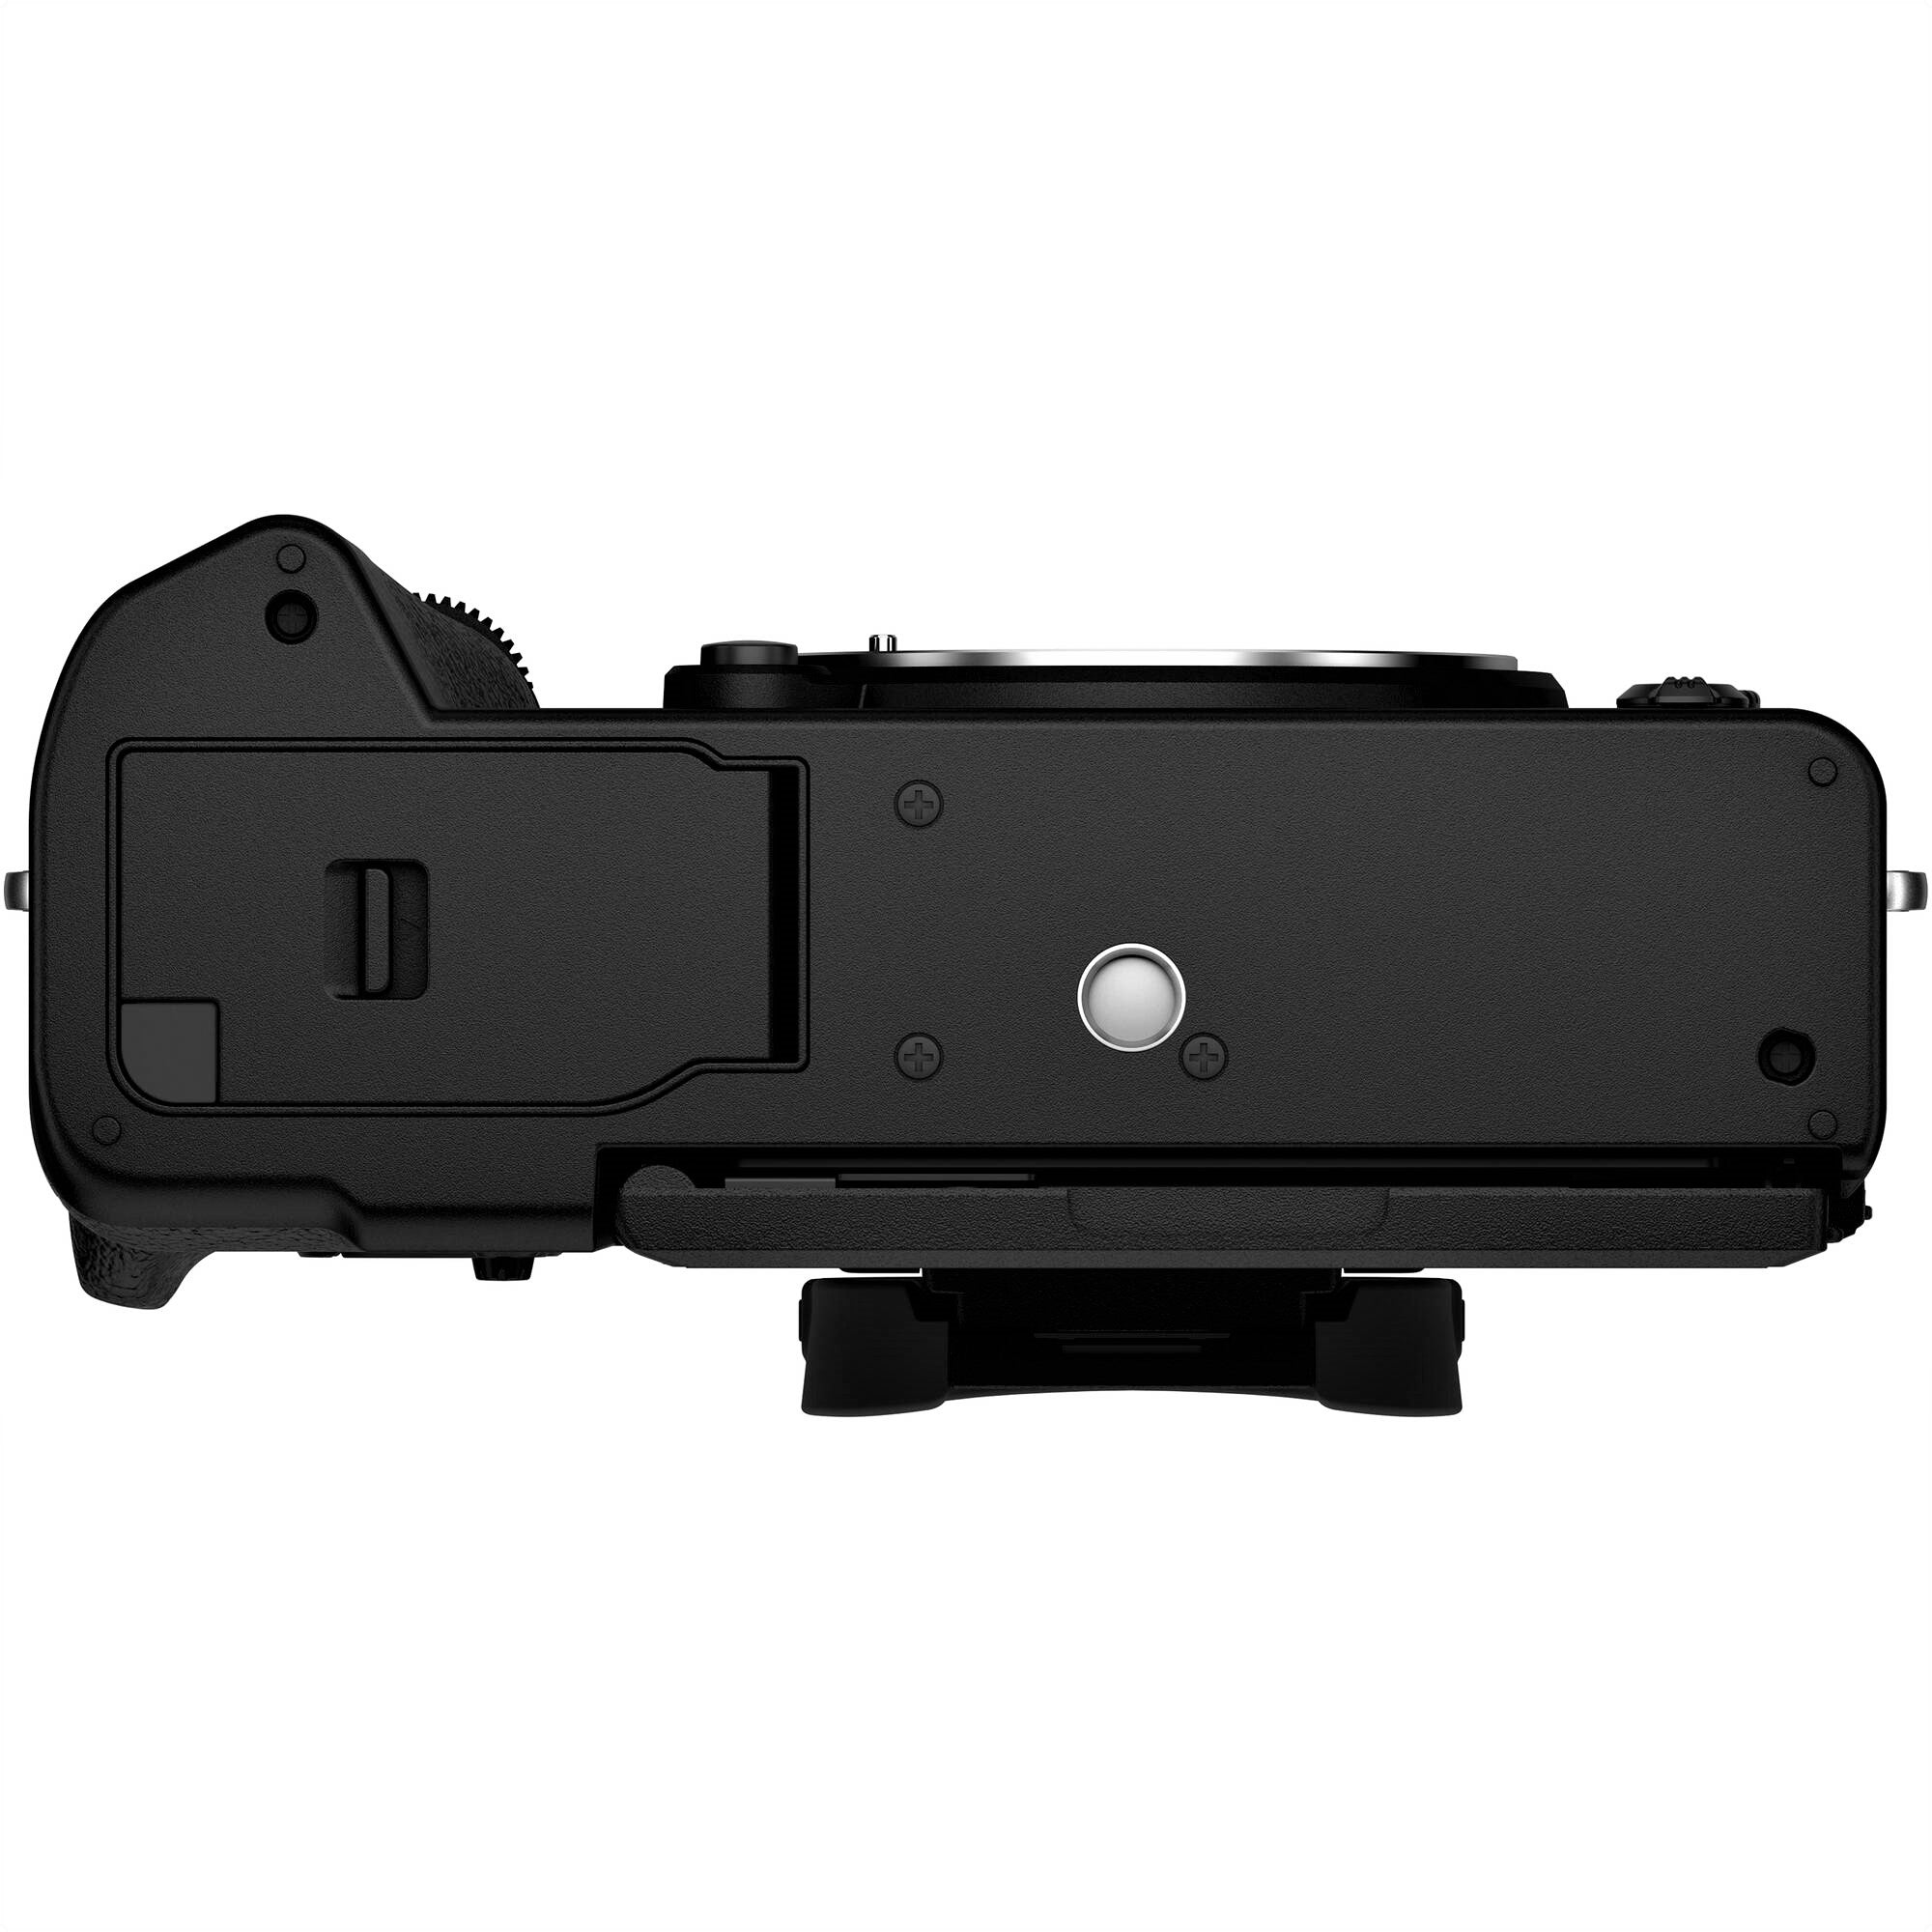 Fujifilm X-T5 Mirrorless Camera with 16-80mm Lens (Black) - Bottom View